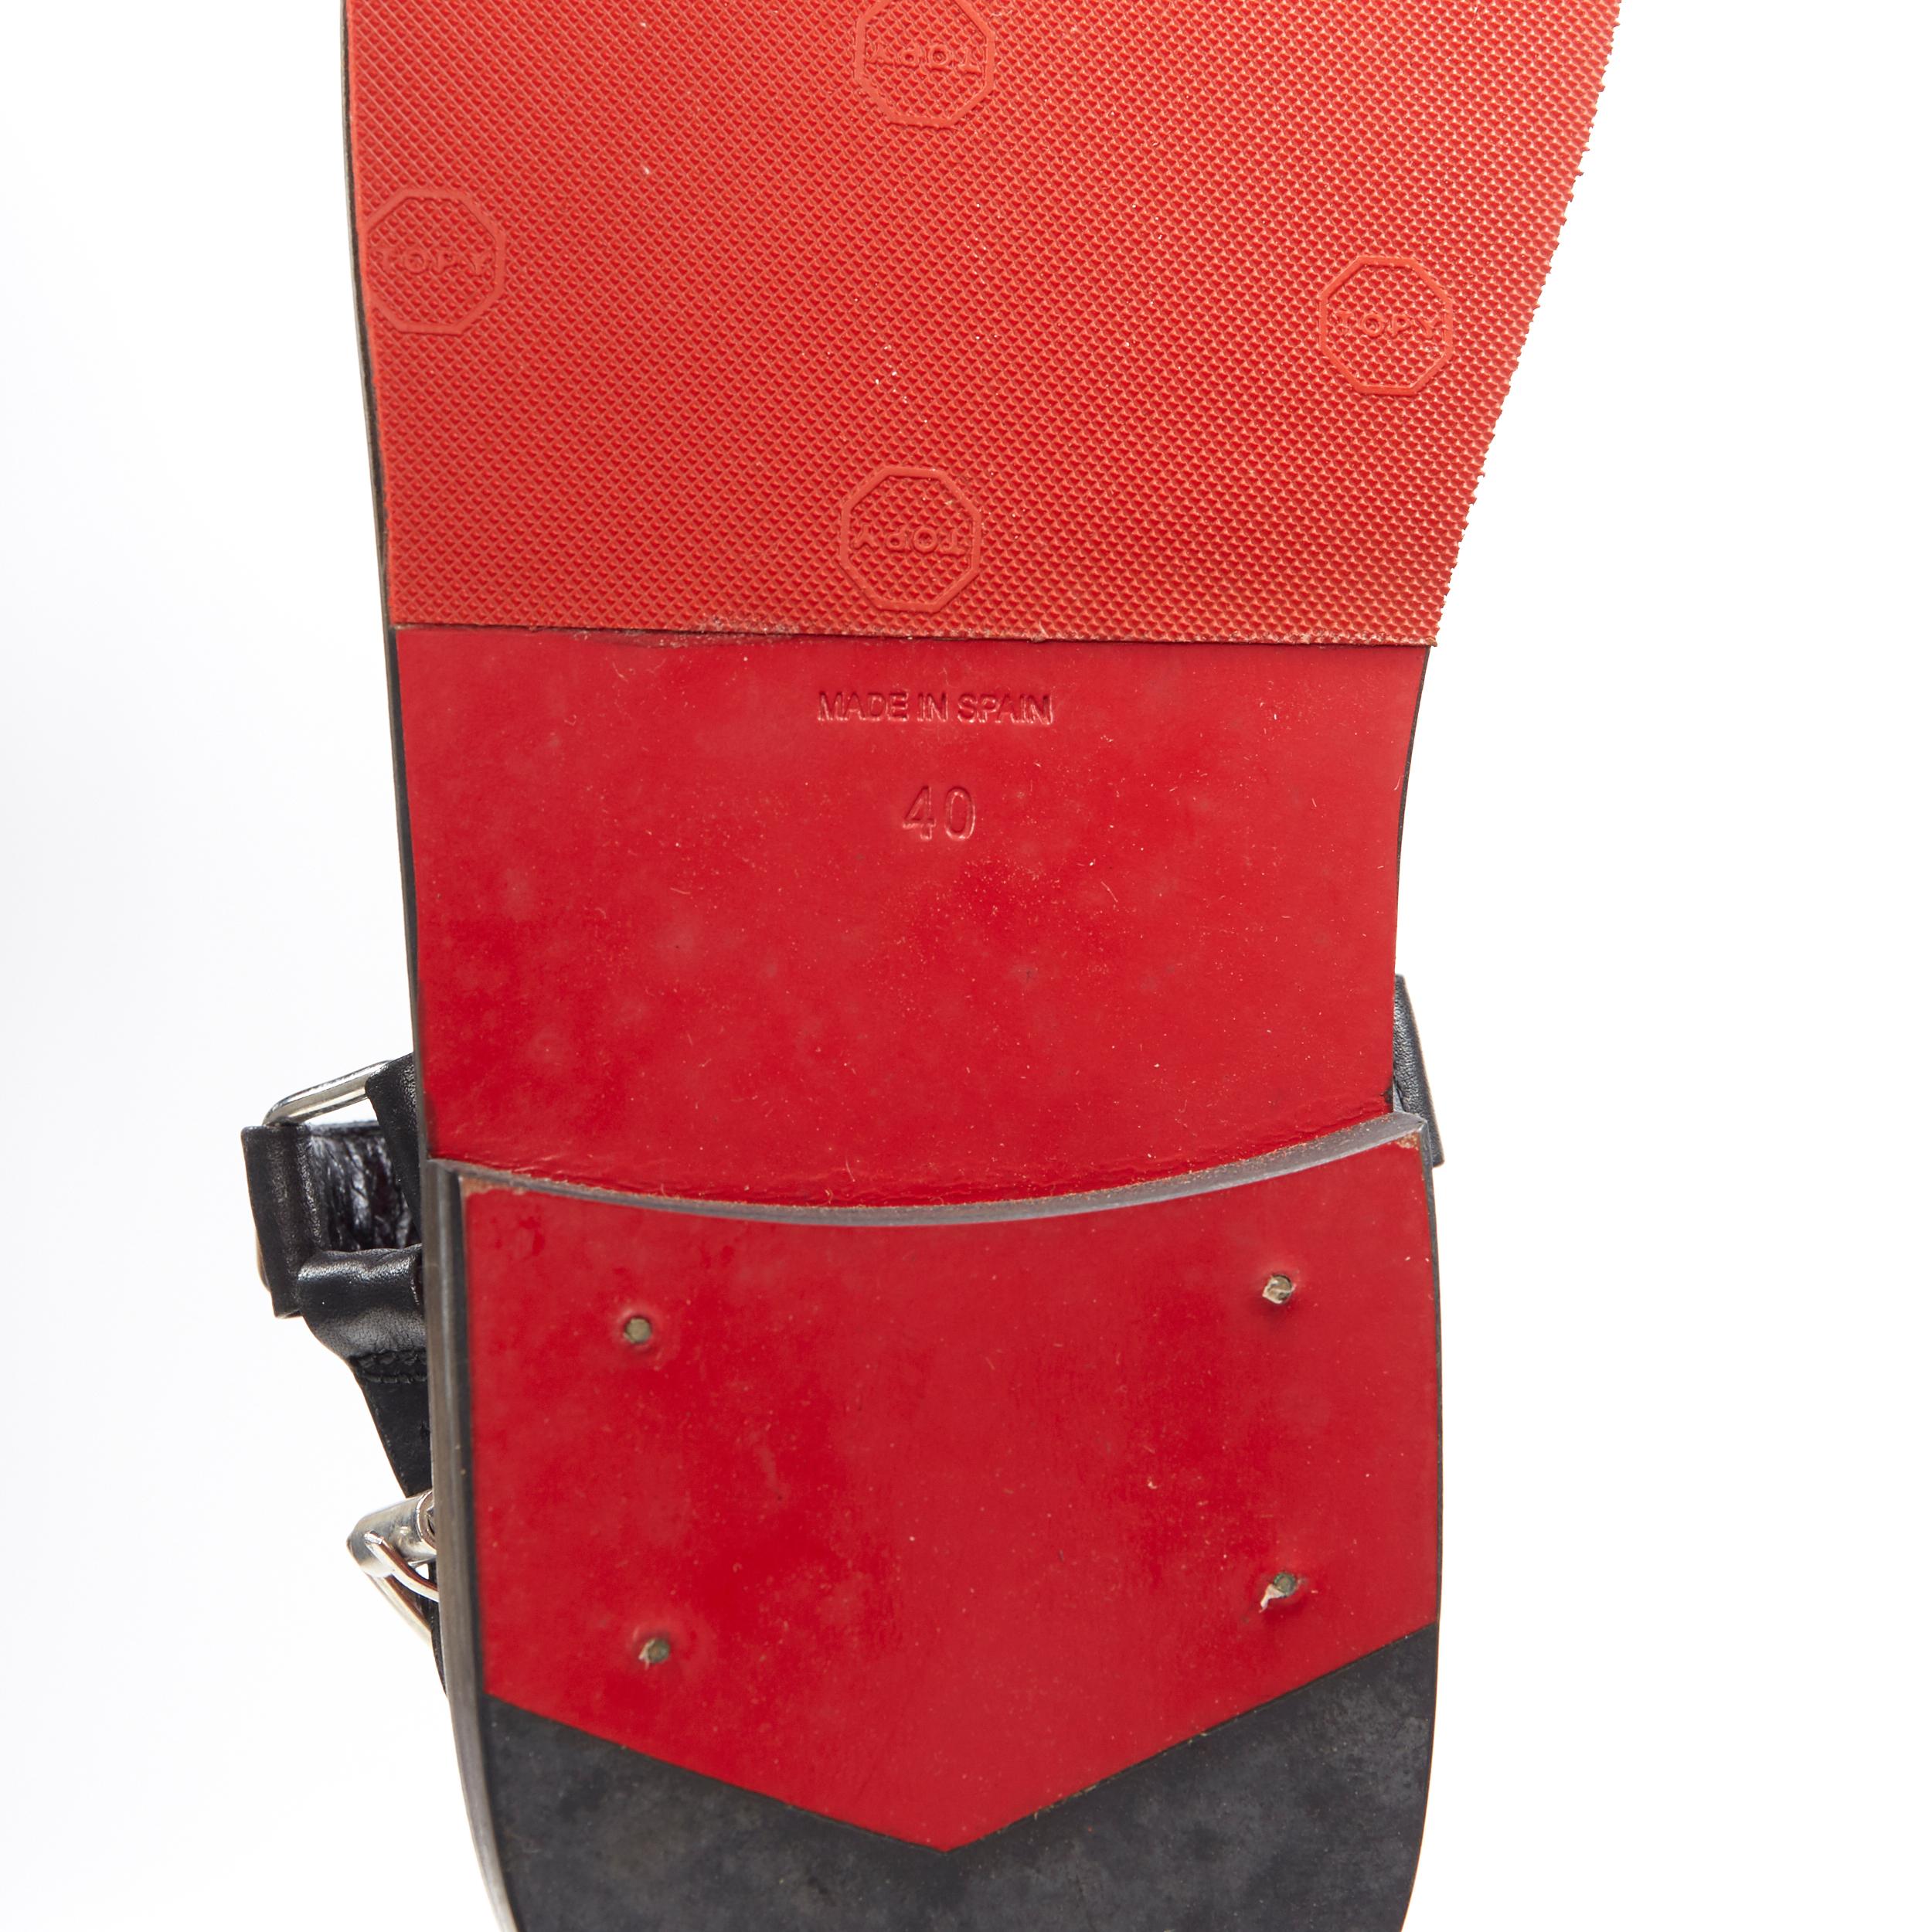 CHRISTIAN LOUBOUTIN Cordaclous Flat silver studded black red leather sandal EU40 6